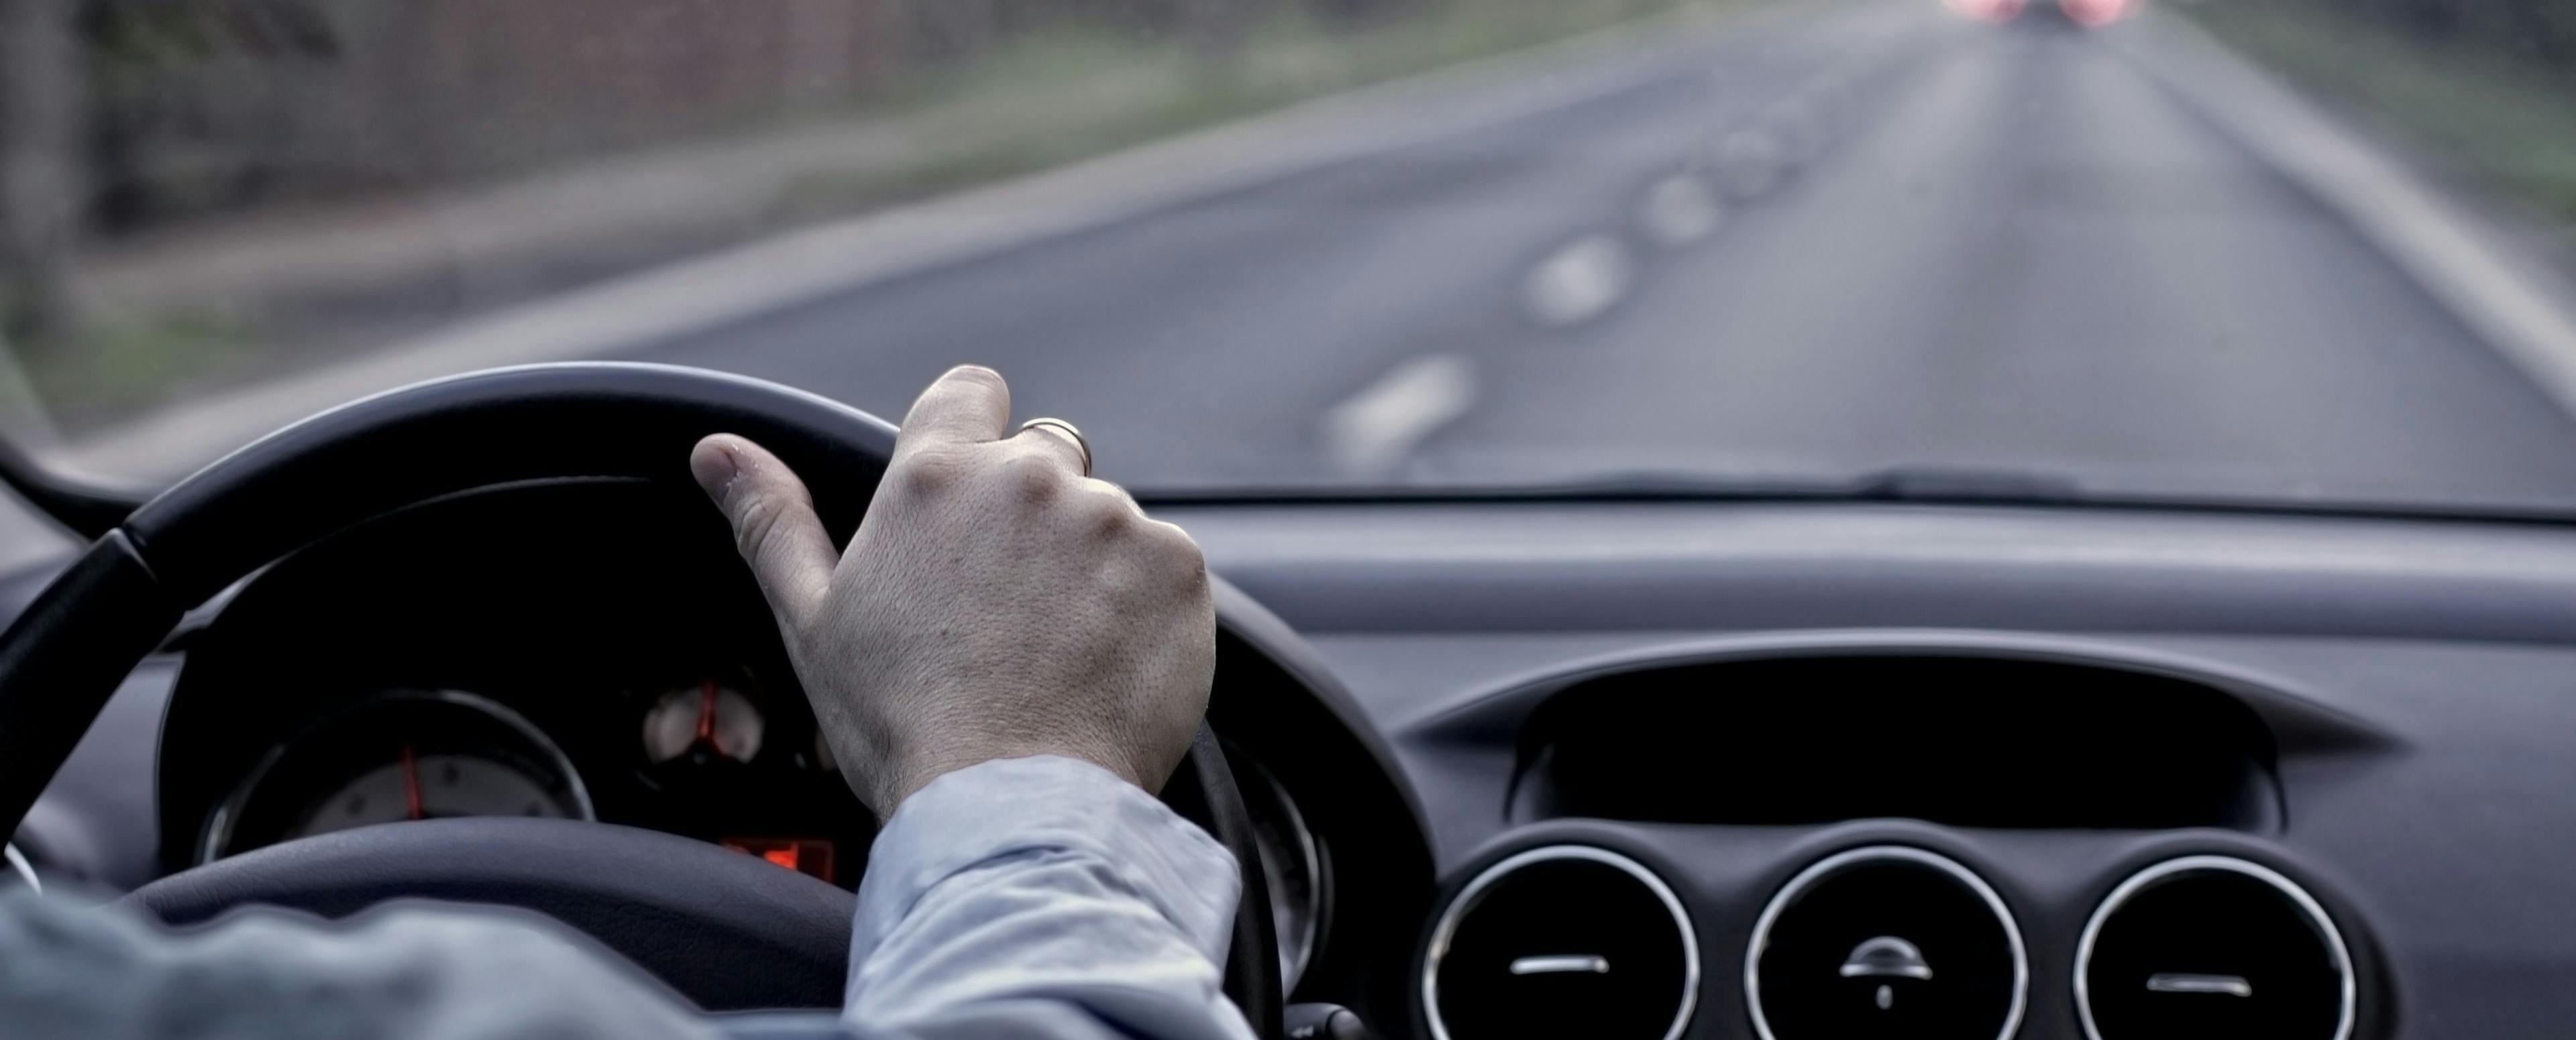 Epilepsy: Calculating Risks of Driving Post-Seizure